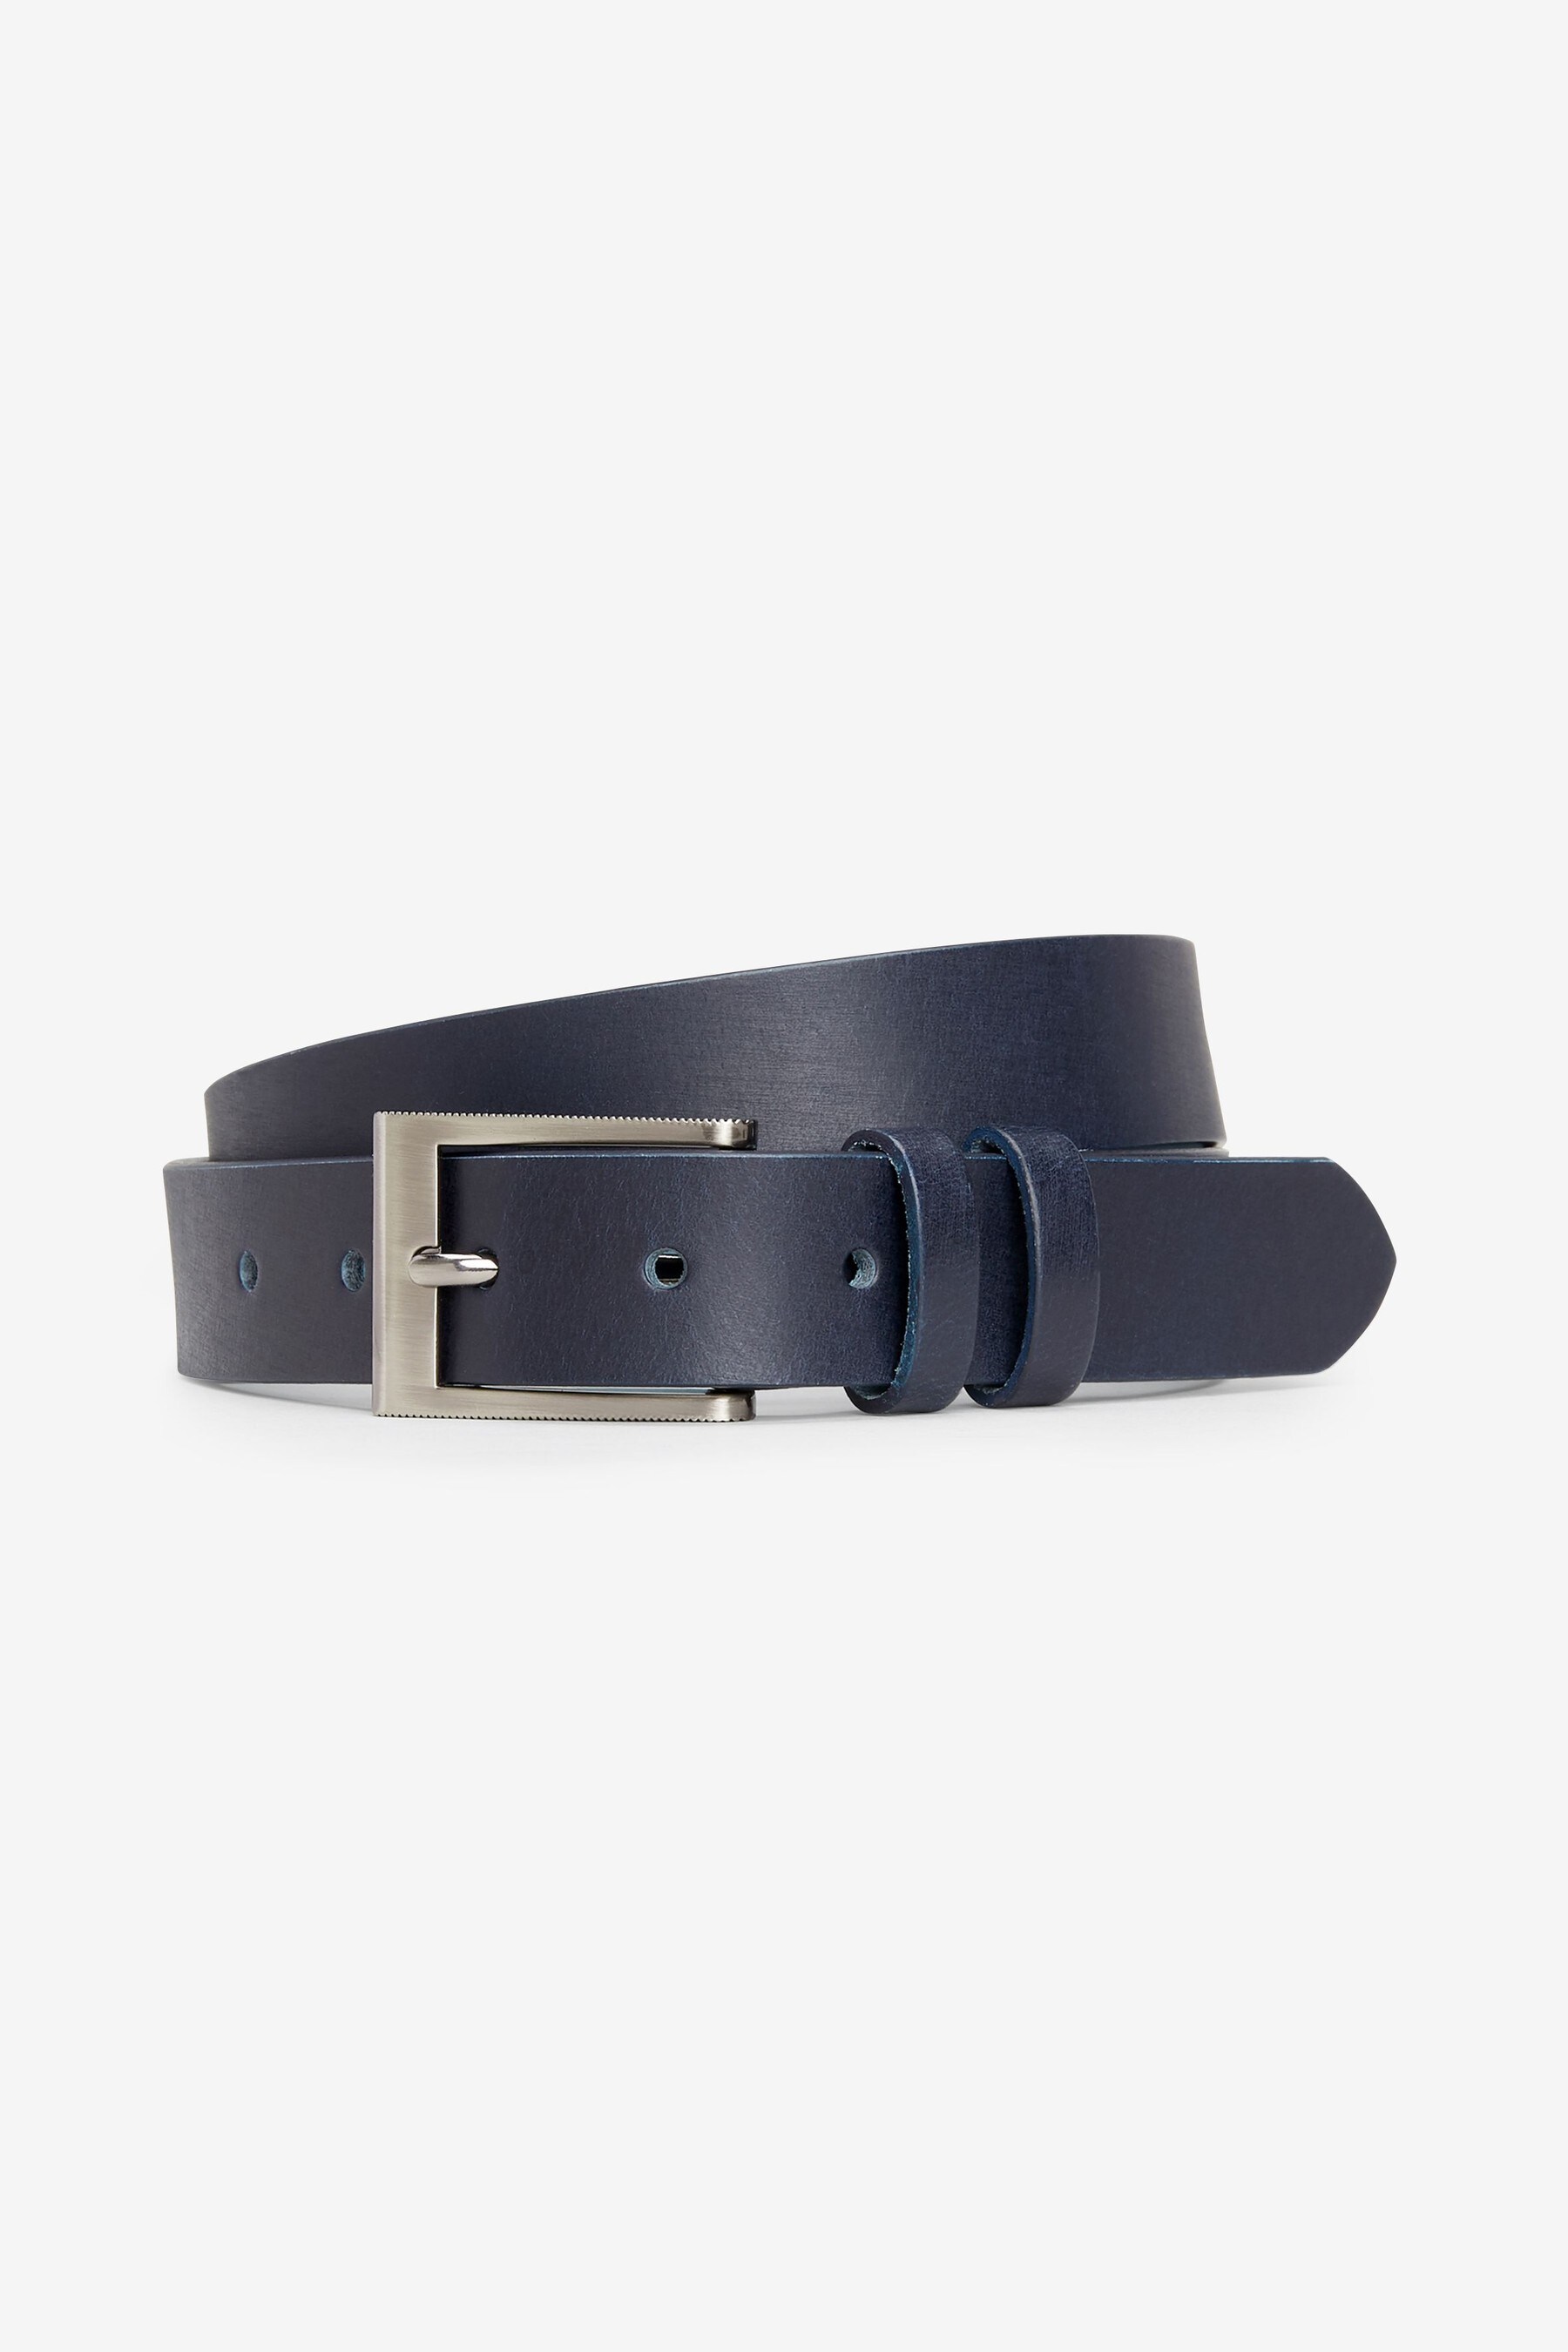 Buy Navy Blue Leather Belt from Next Ireland